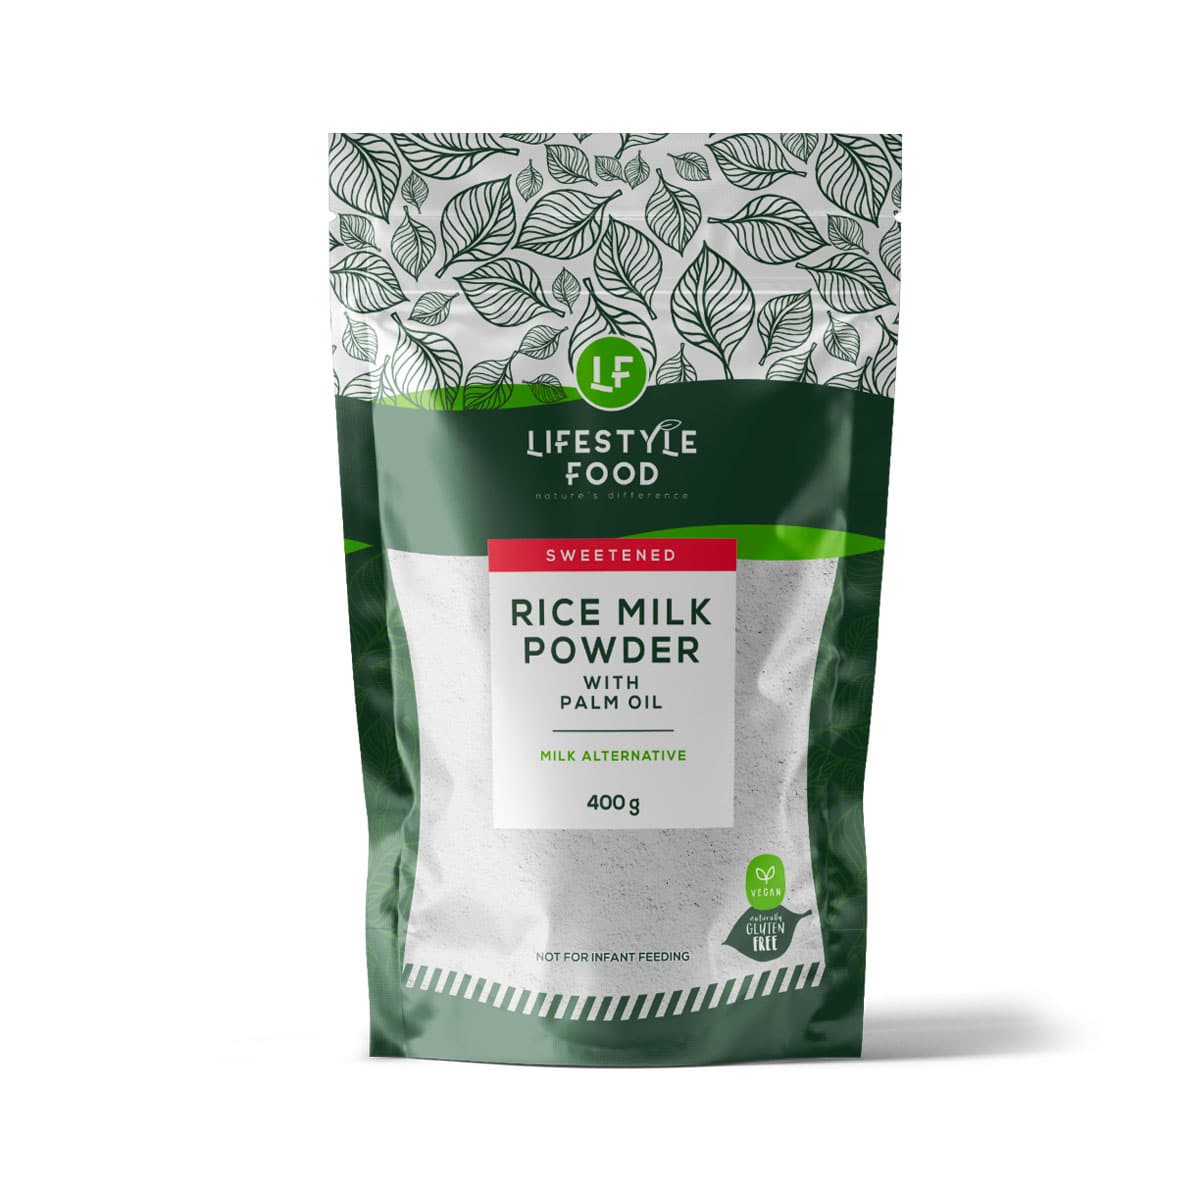 Lifestyle Food Sweetened Rice Milk Powder - 400g